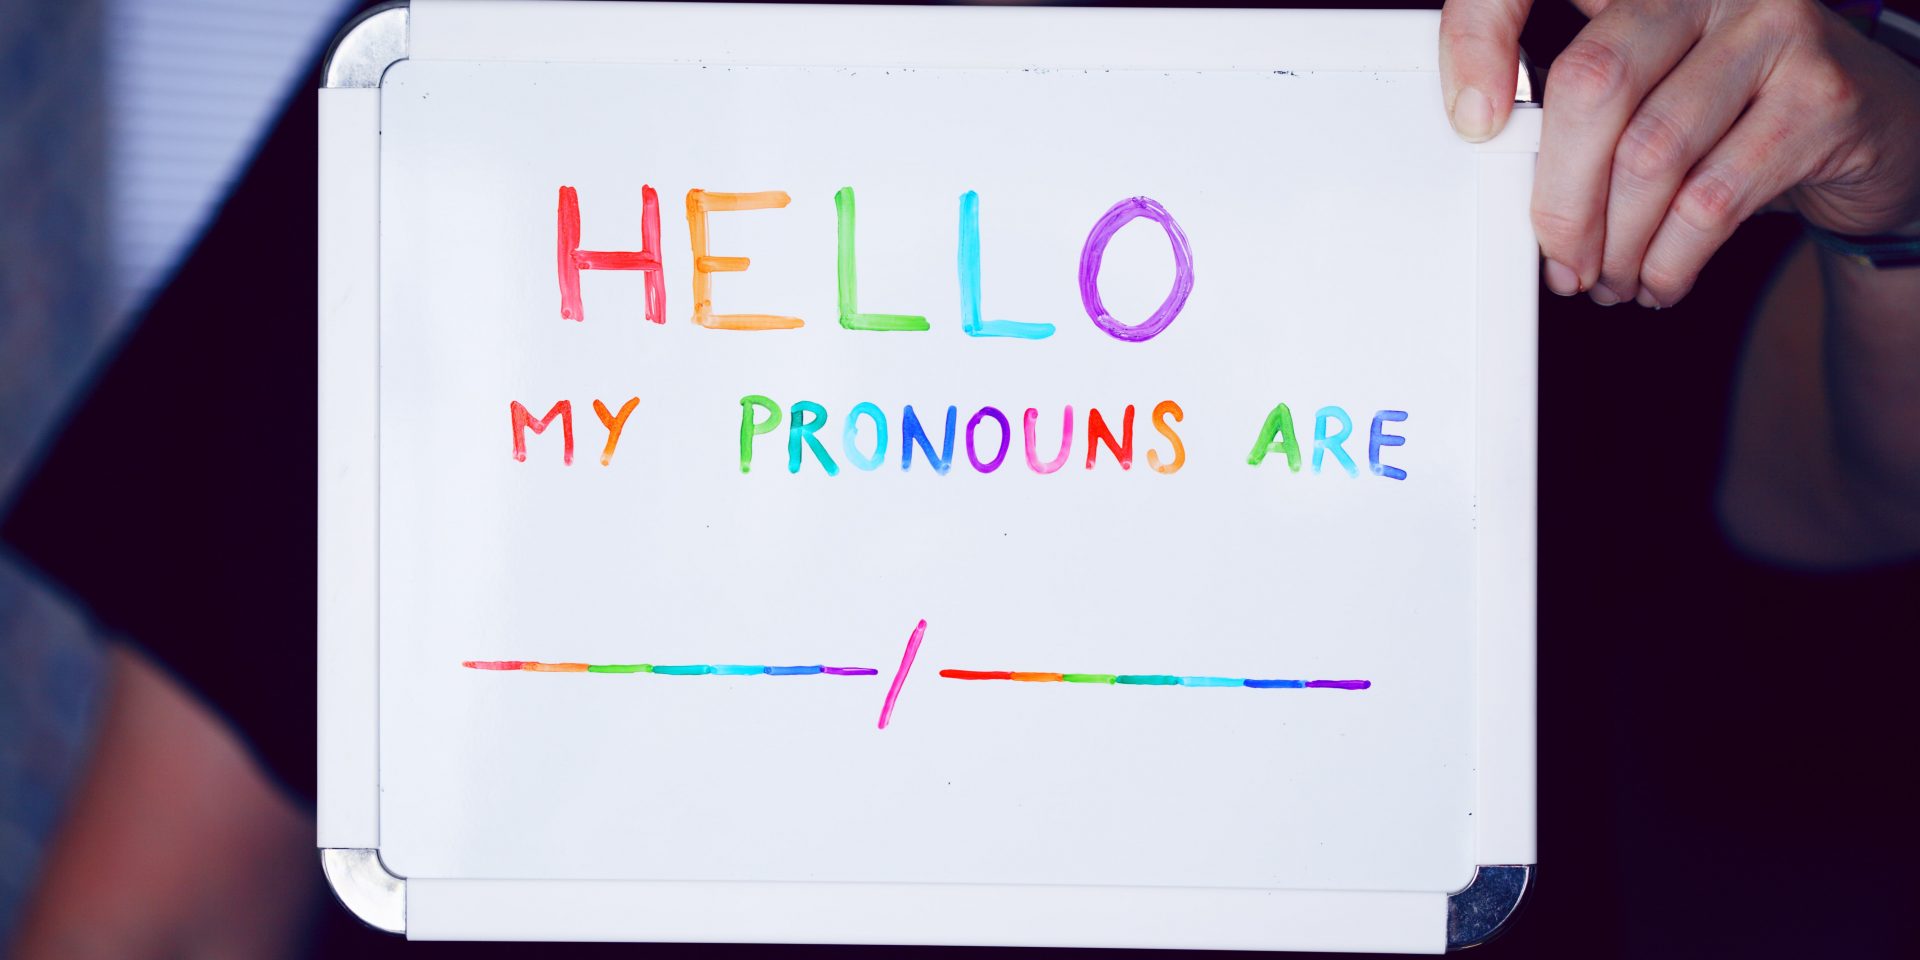 Why we use pronouns